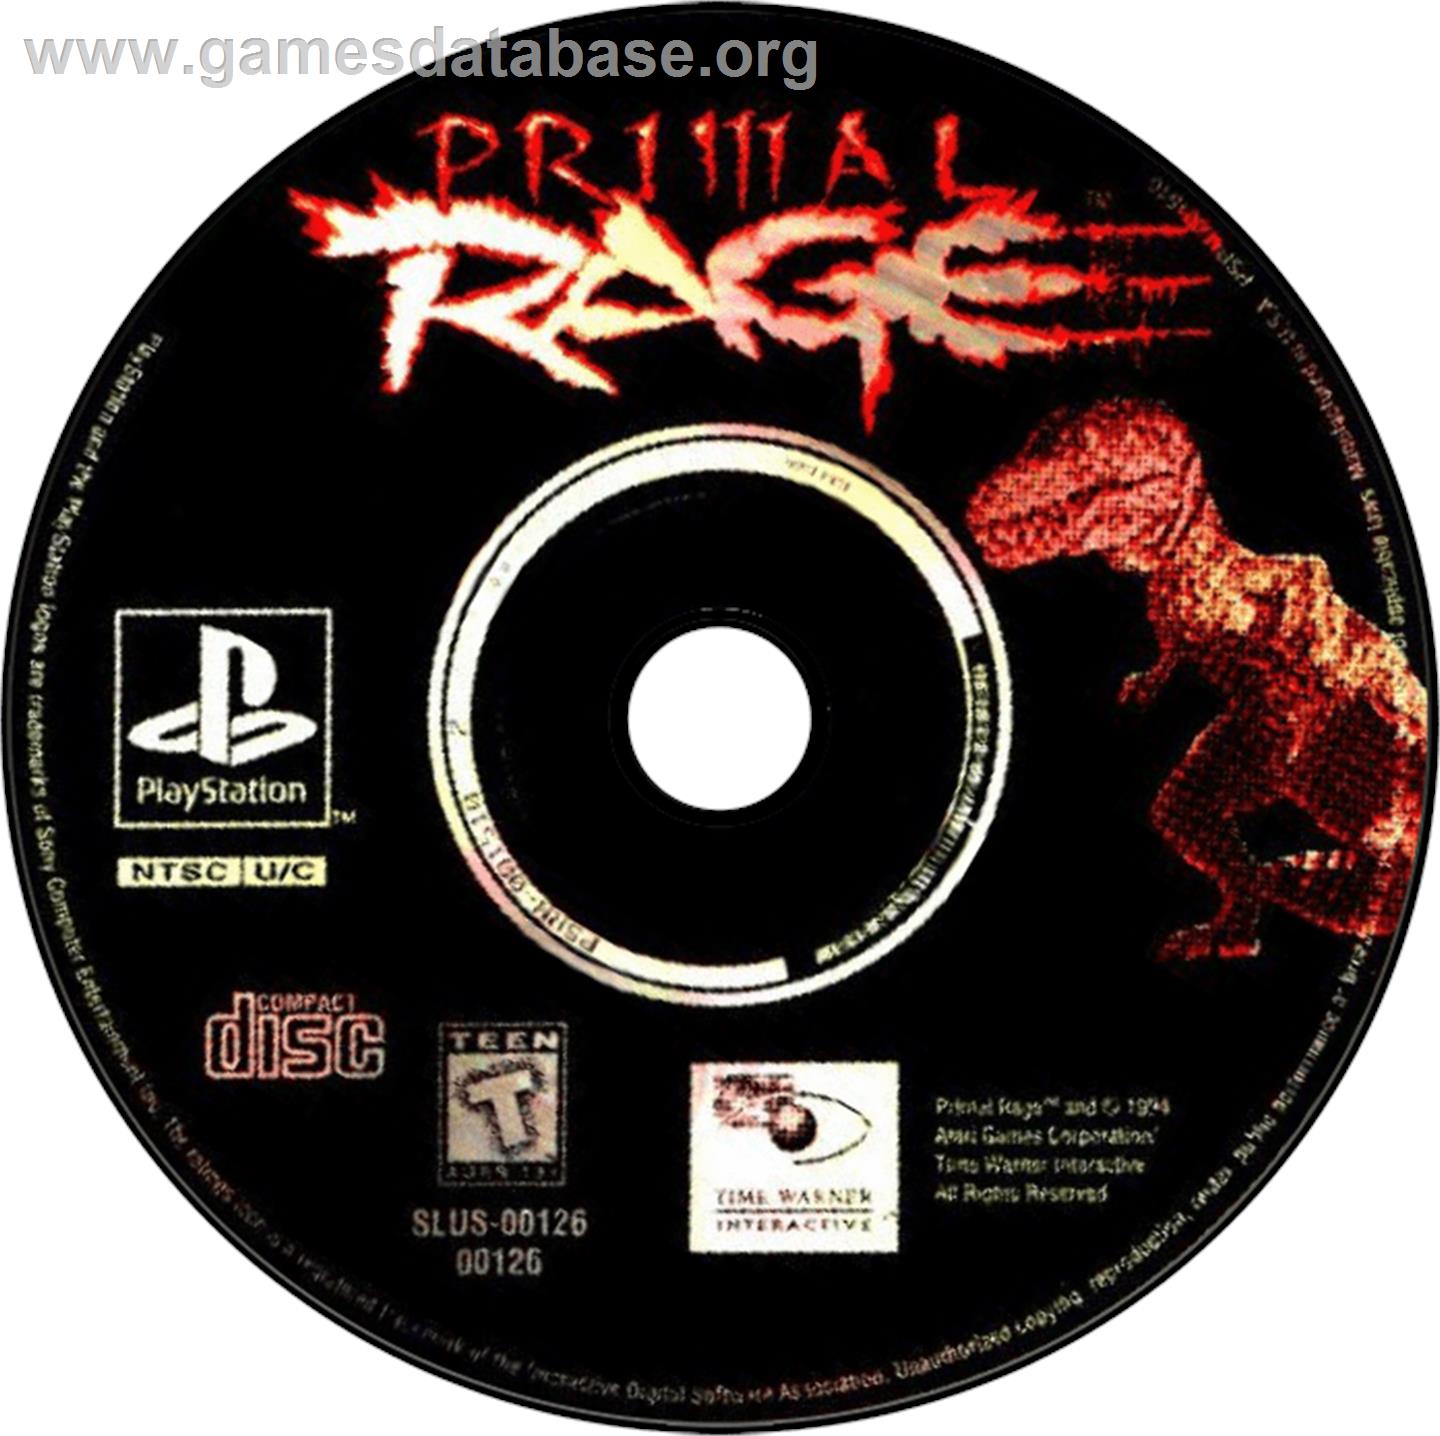 Primal Rage - Sony Playstation - Artwork - Disc